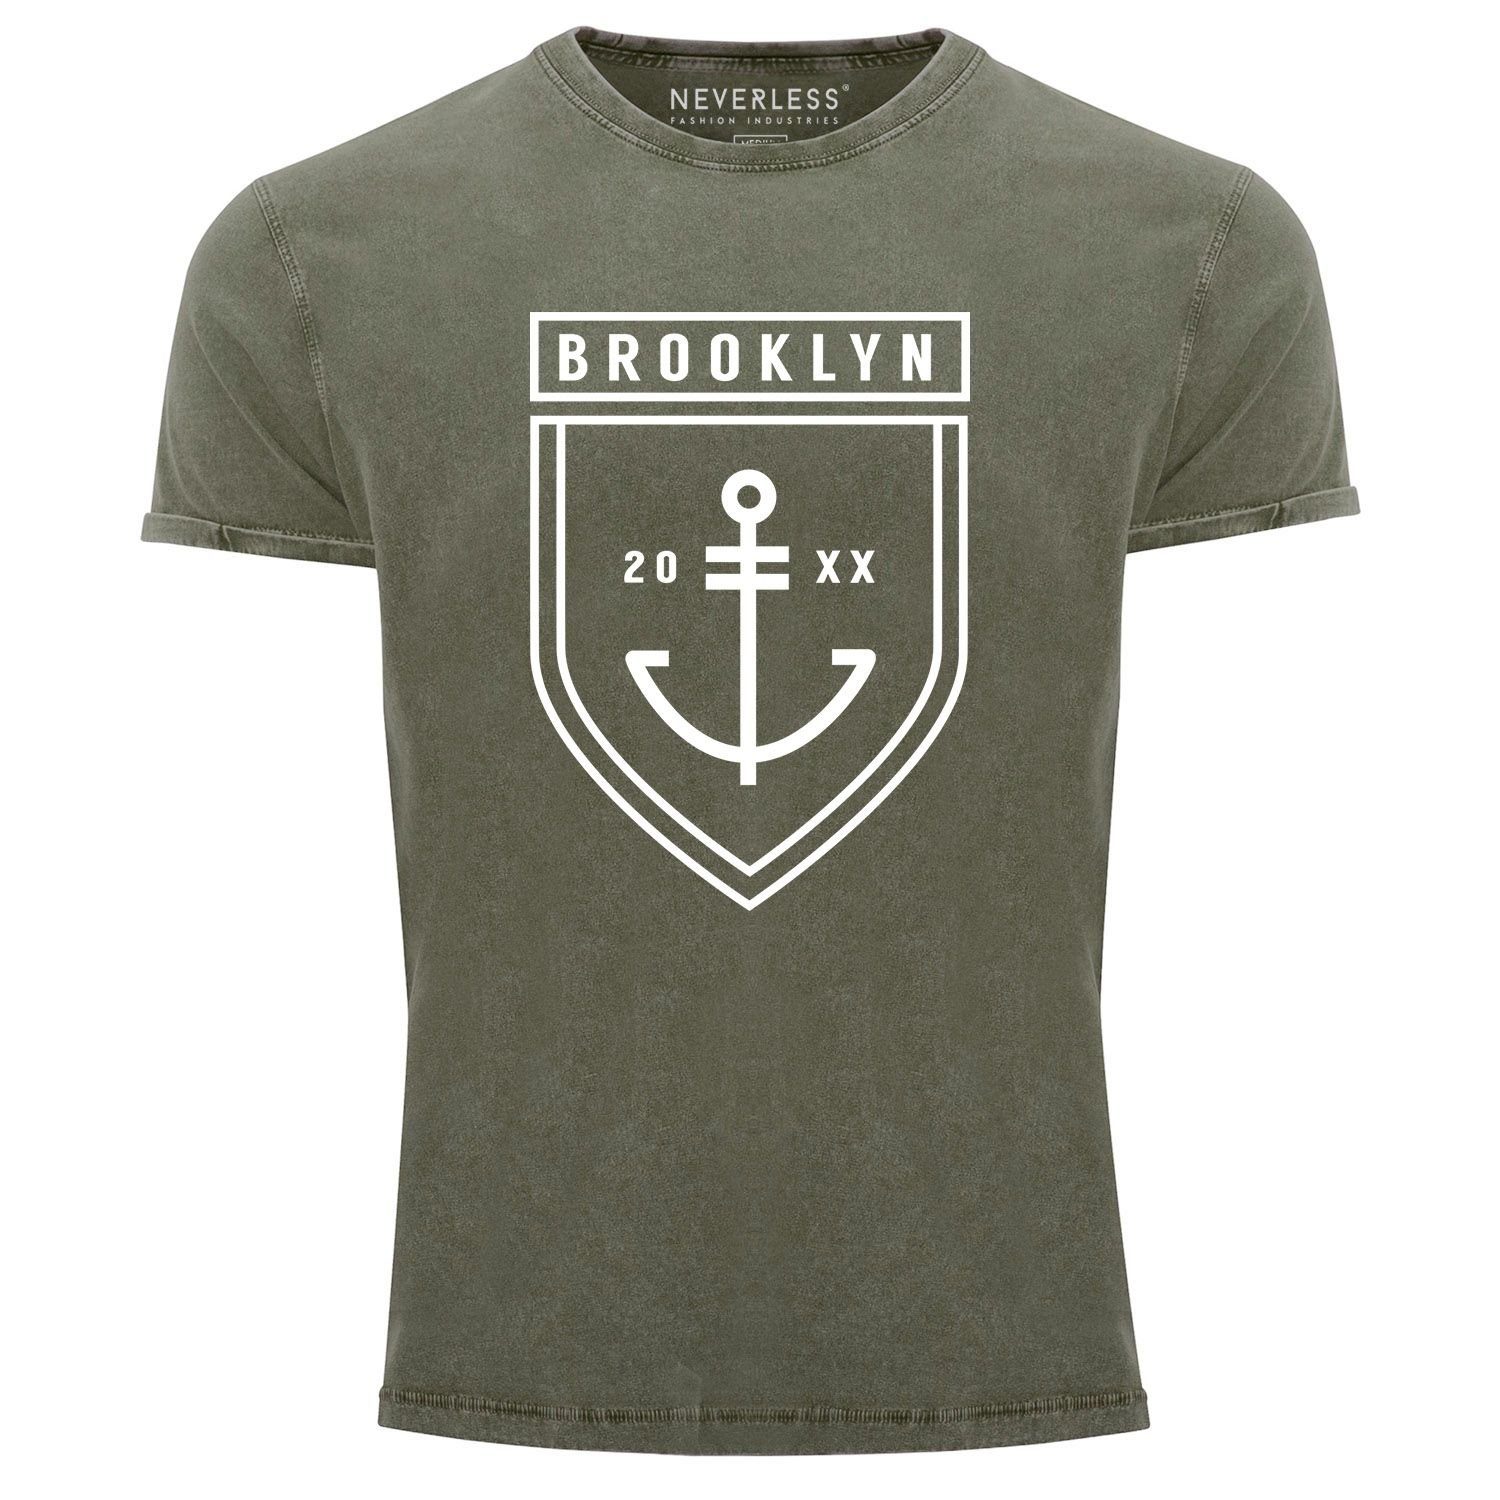 Neverless Print-Shirt Cooles Angesagtes Herren T-Shirt Vintage Shirt Brooklyn Anker Aufdruck Used Look Slim Fit Neverless® mit Print oliv